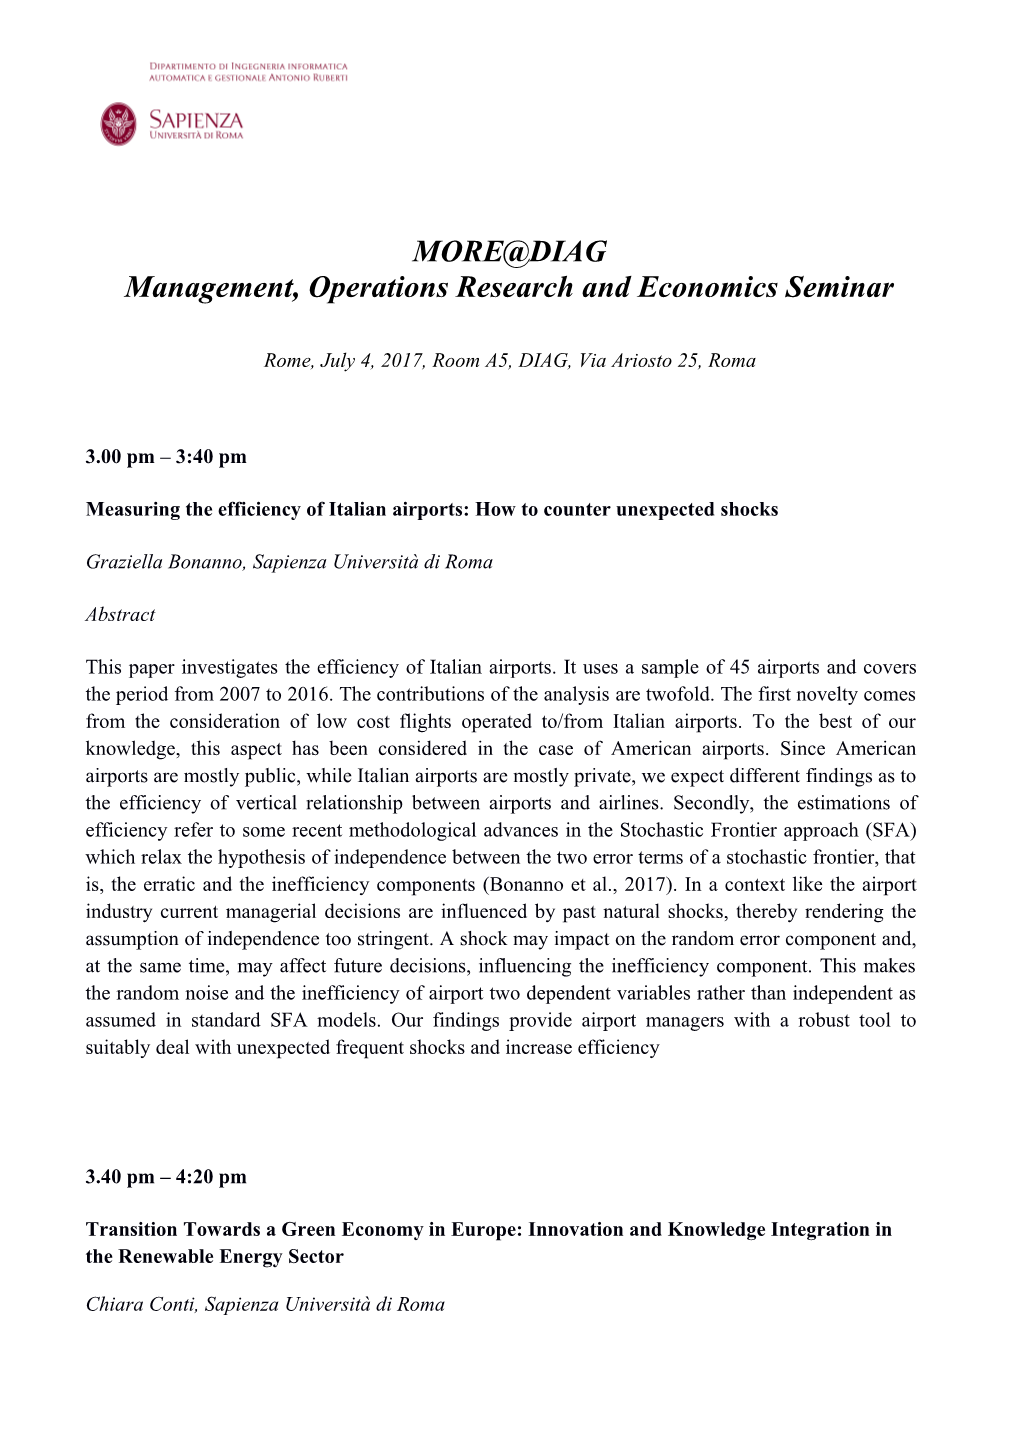 Management, Operations Research and Economics Seminar